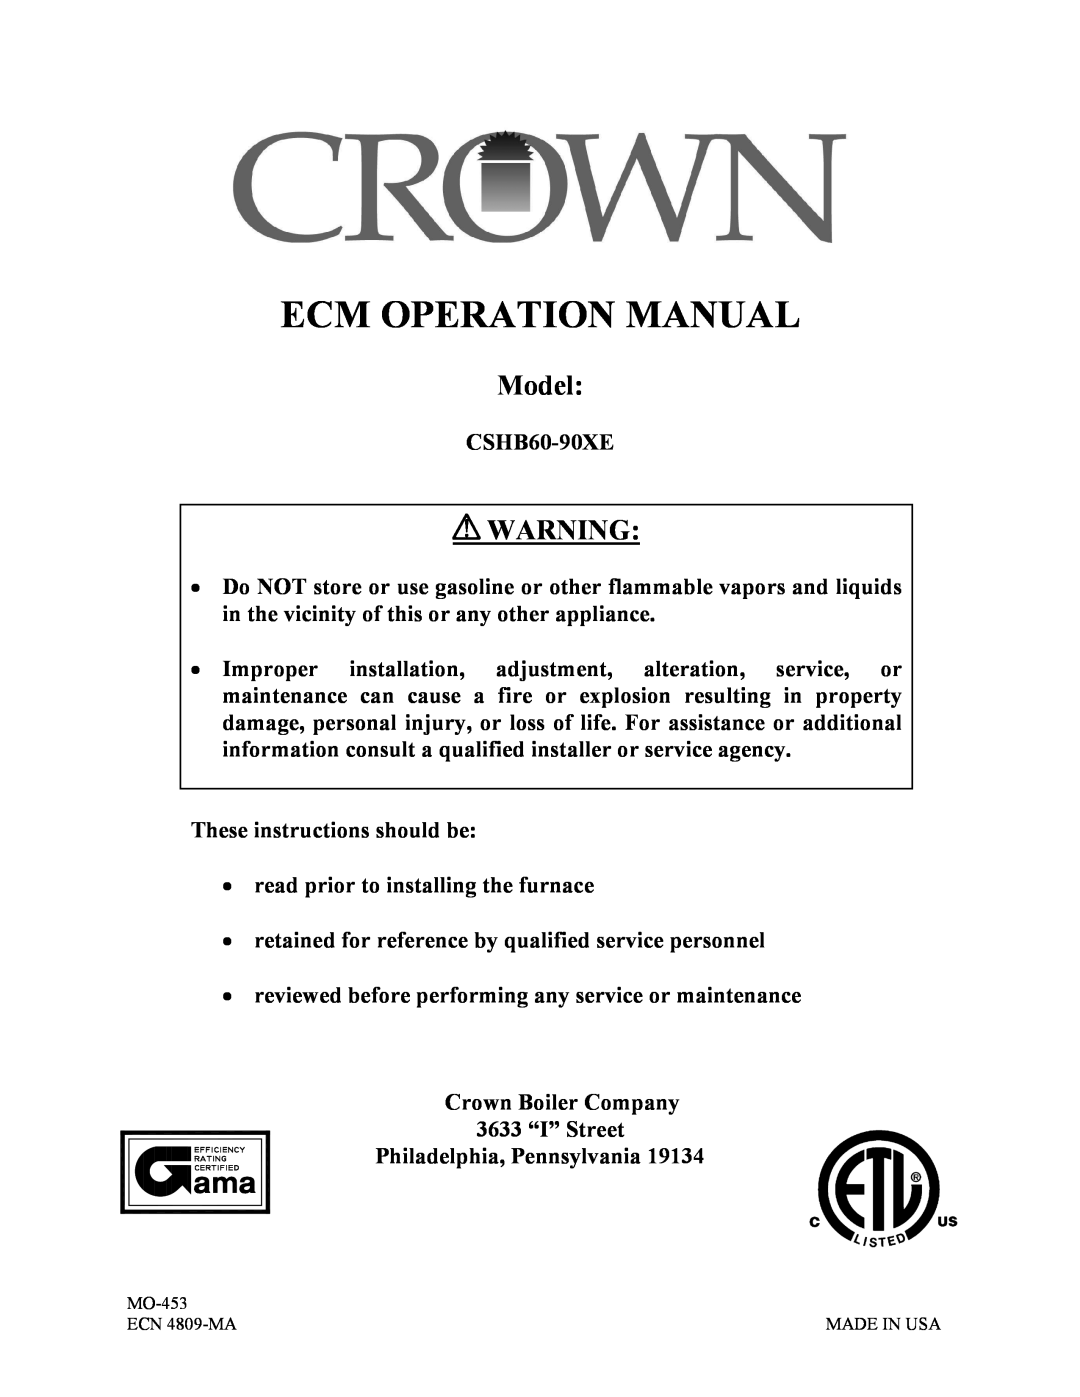 Crown CSHB60-90XE operation manual Ecm Operation Manual, Model, c WARNING 